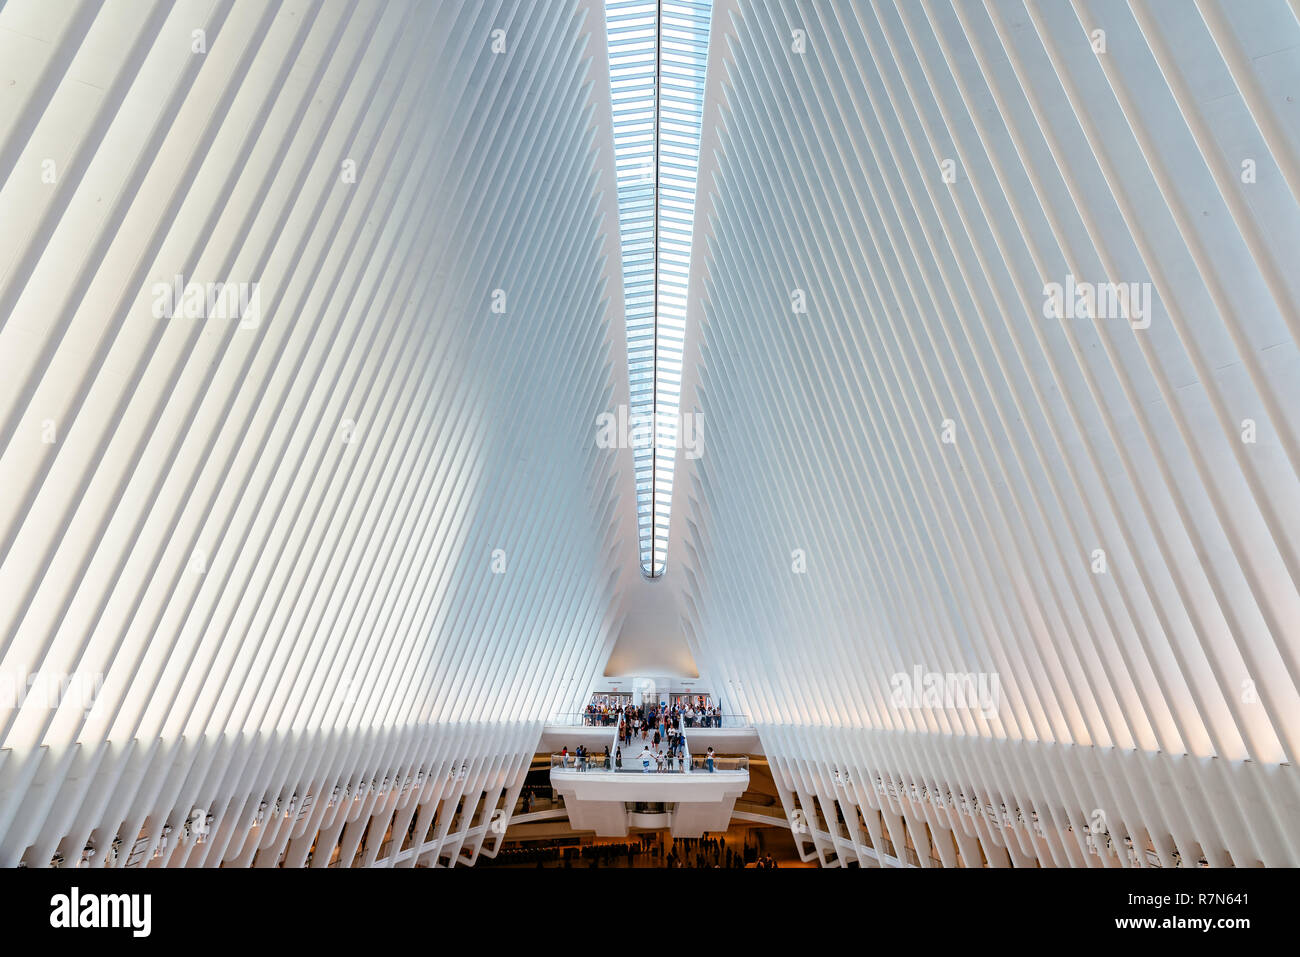 New York City, USA - June 24, 2018: Interior view of World Trade Center Transportation Hub or Oculus designed by Santiago Calatrava architect Stock Photo